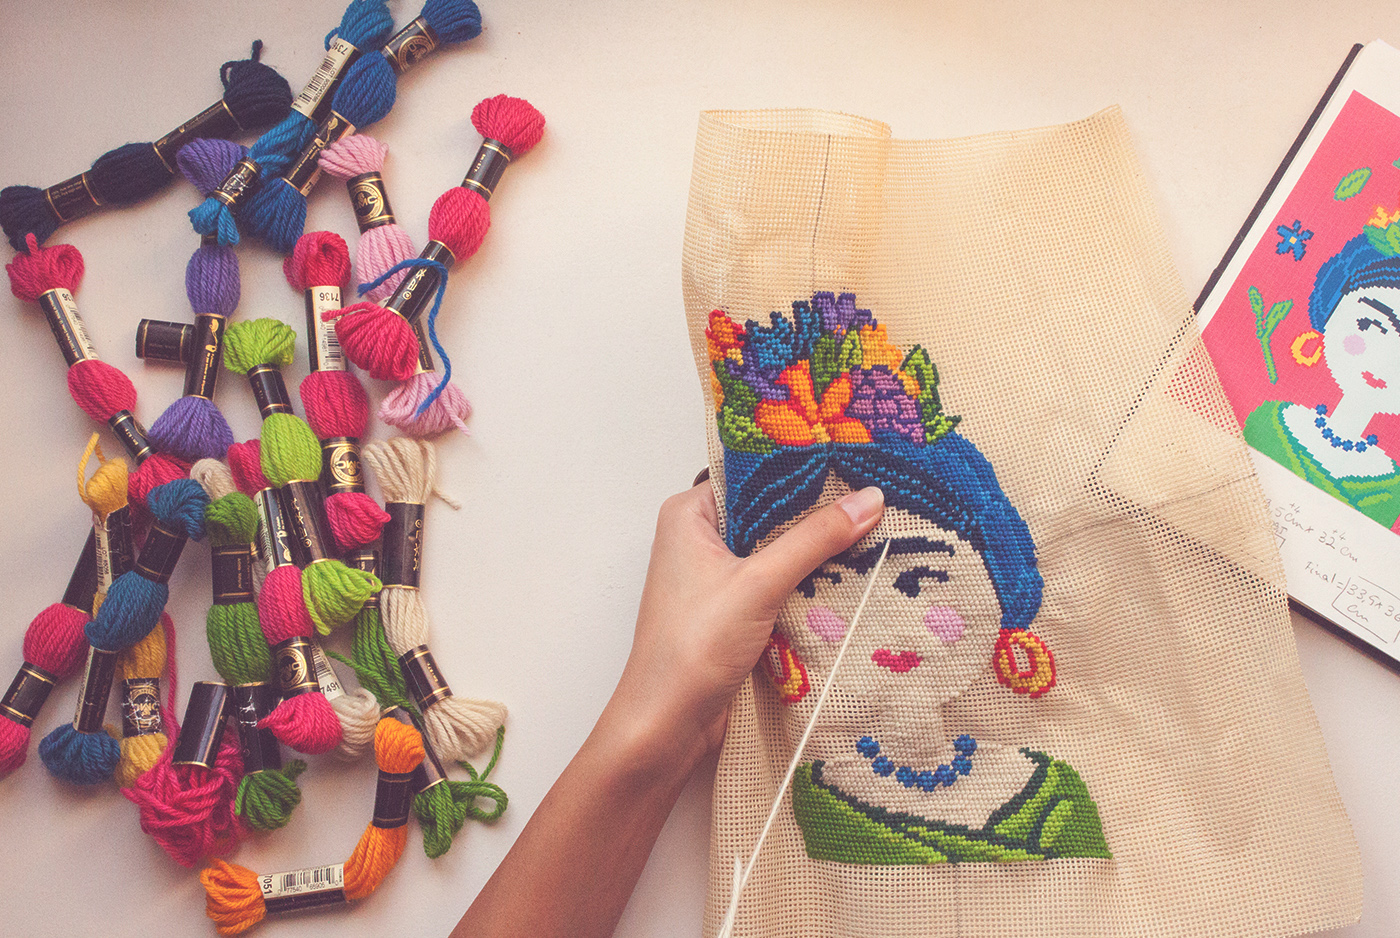 Embroidery frida kahlo canevas canvas handmade colorful mexico Mexican artist painter egypt cairo color art